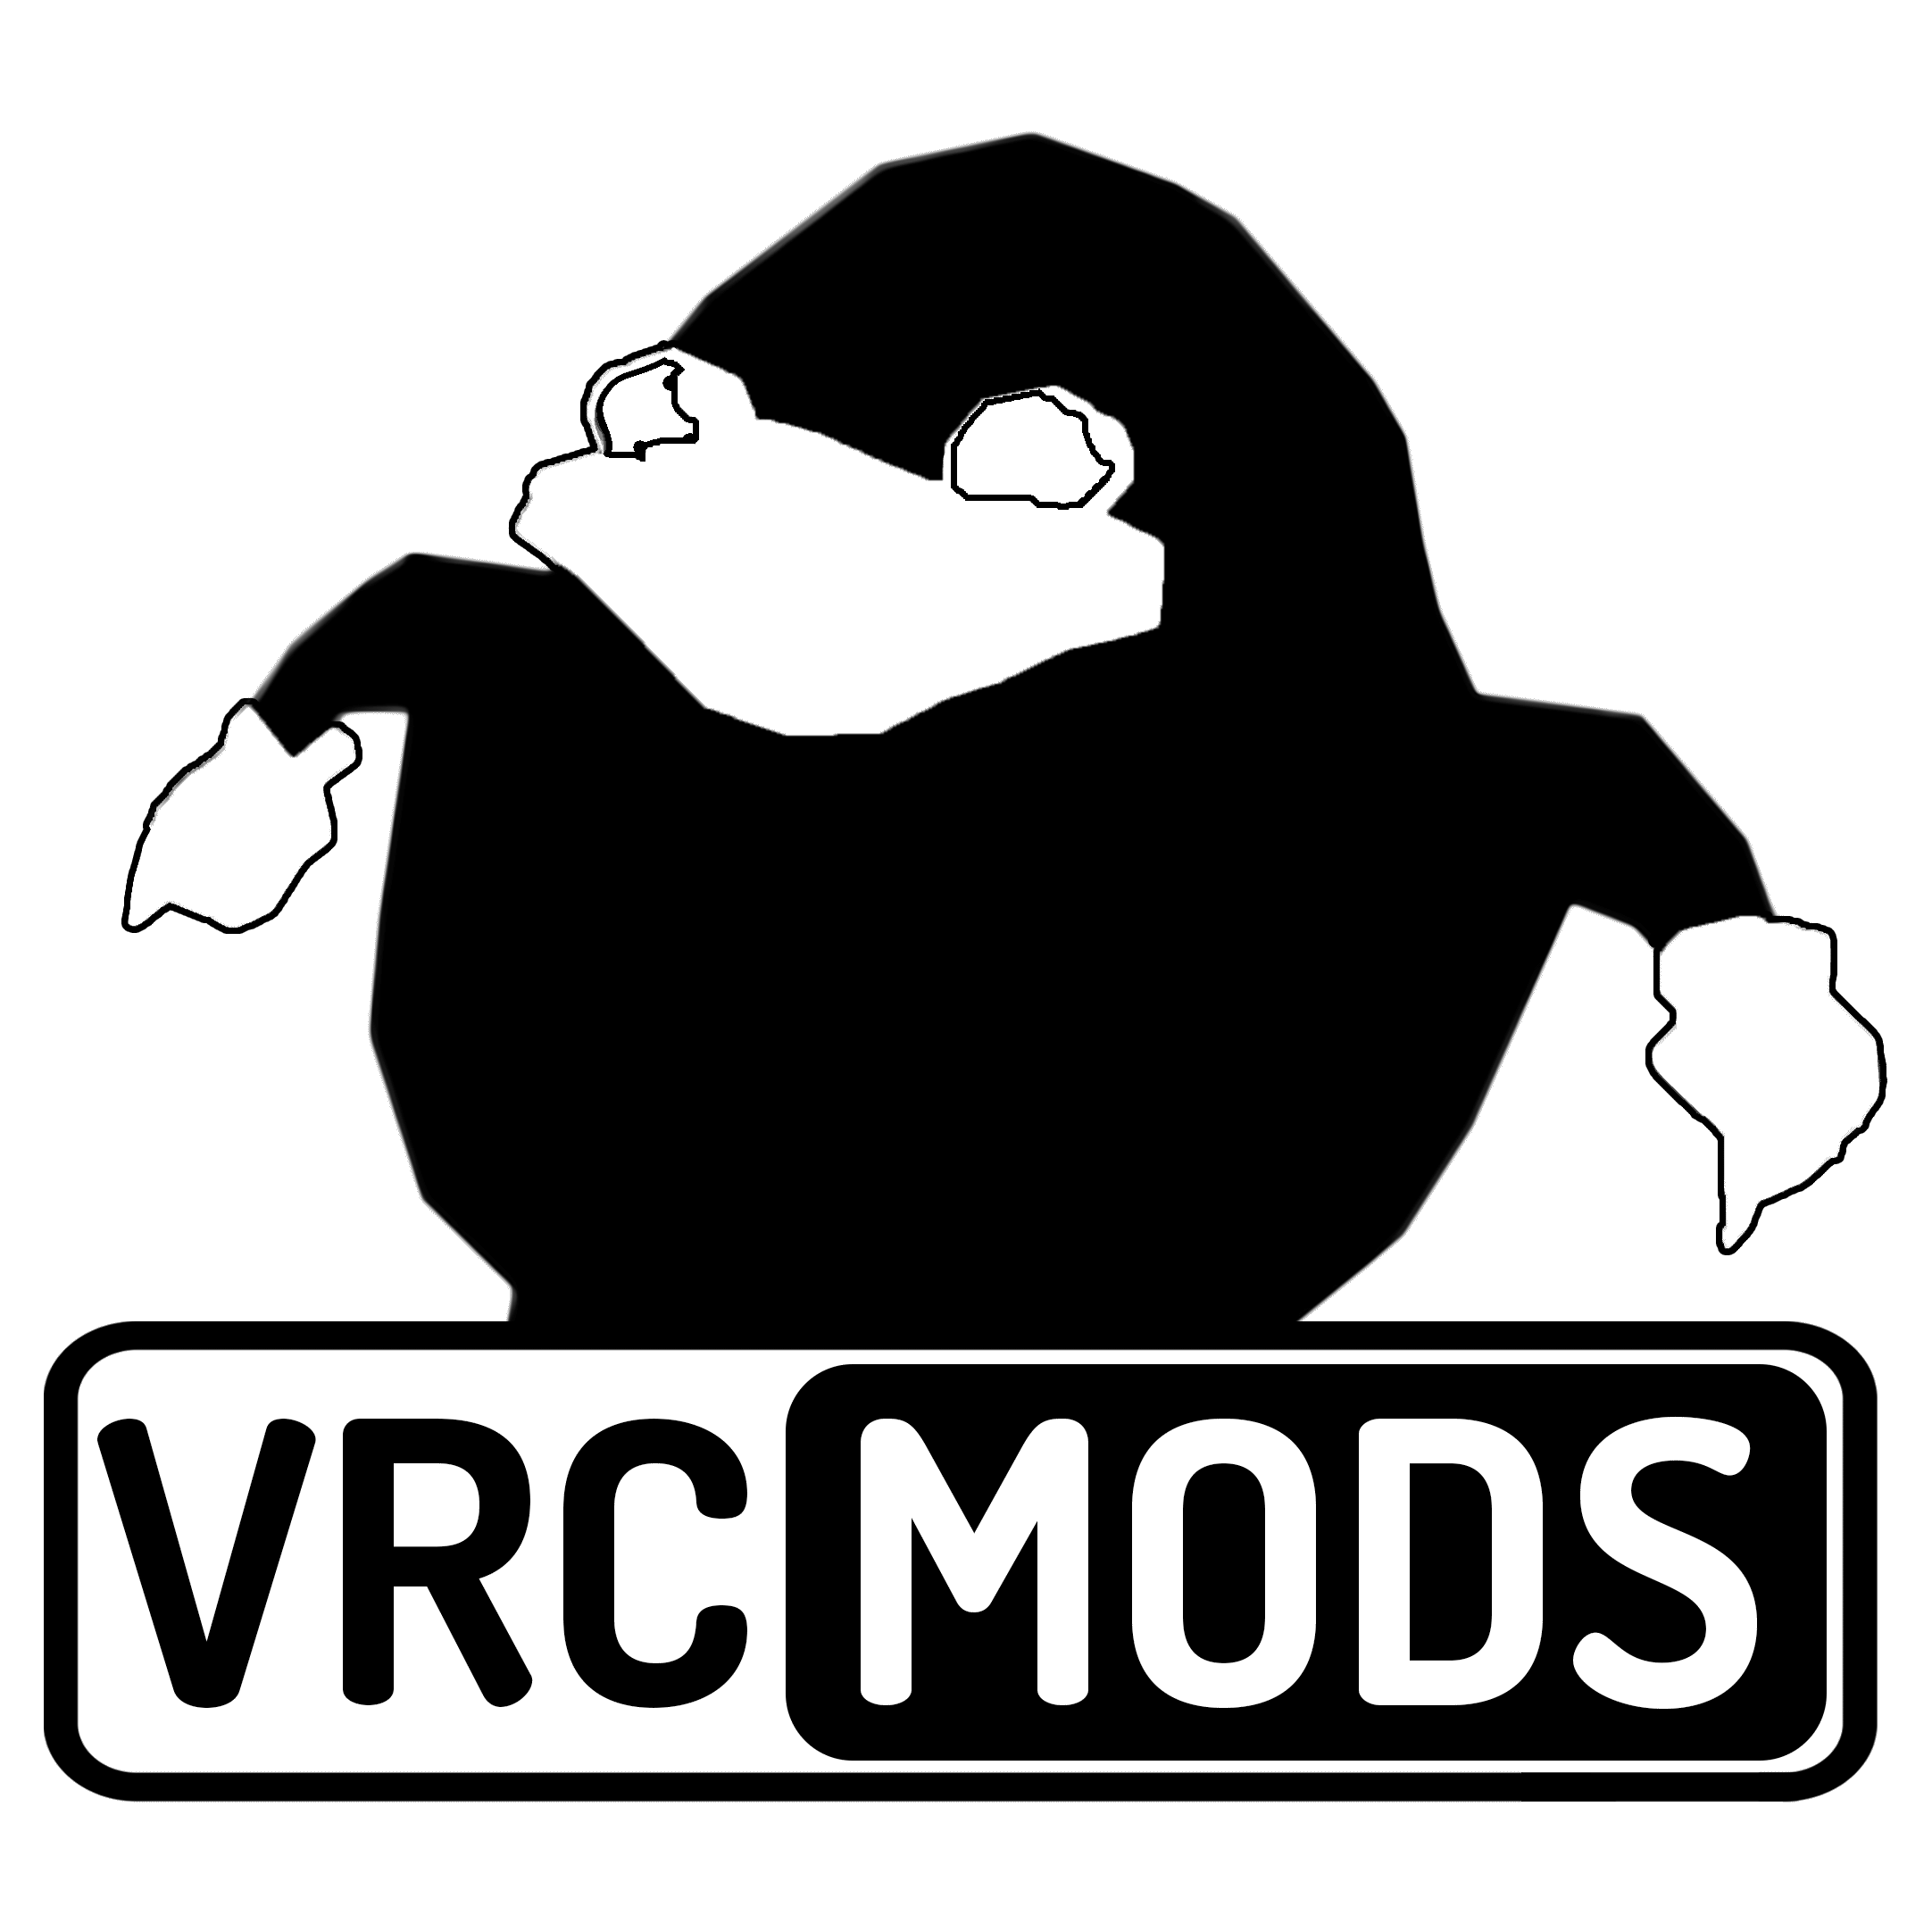 VRChat Logo - VRCMods - Home - VRChat Avatars